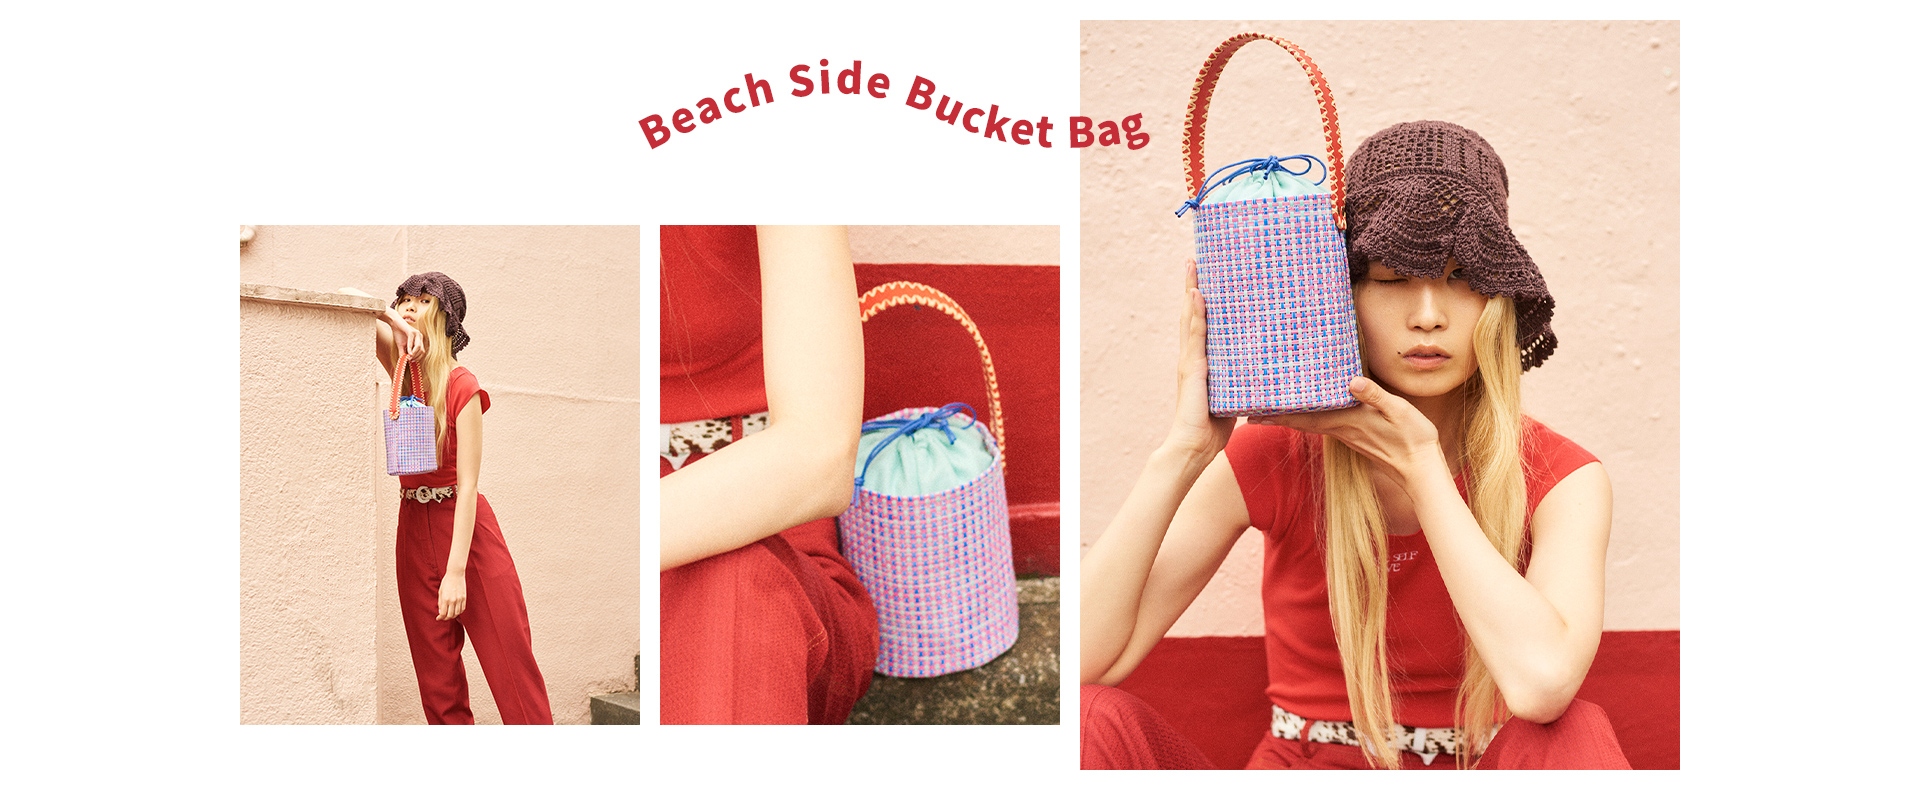 BEACH SIDE BUCKET BAG